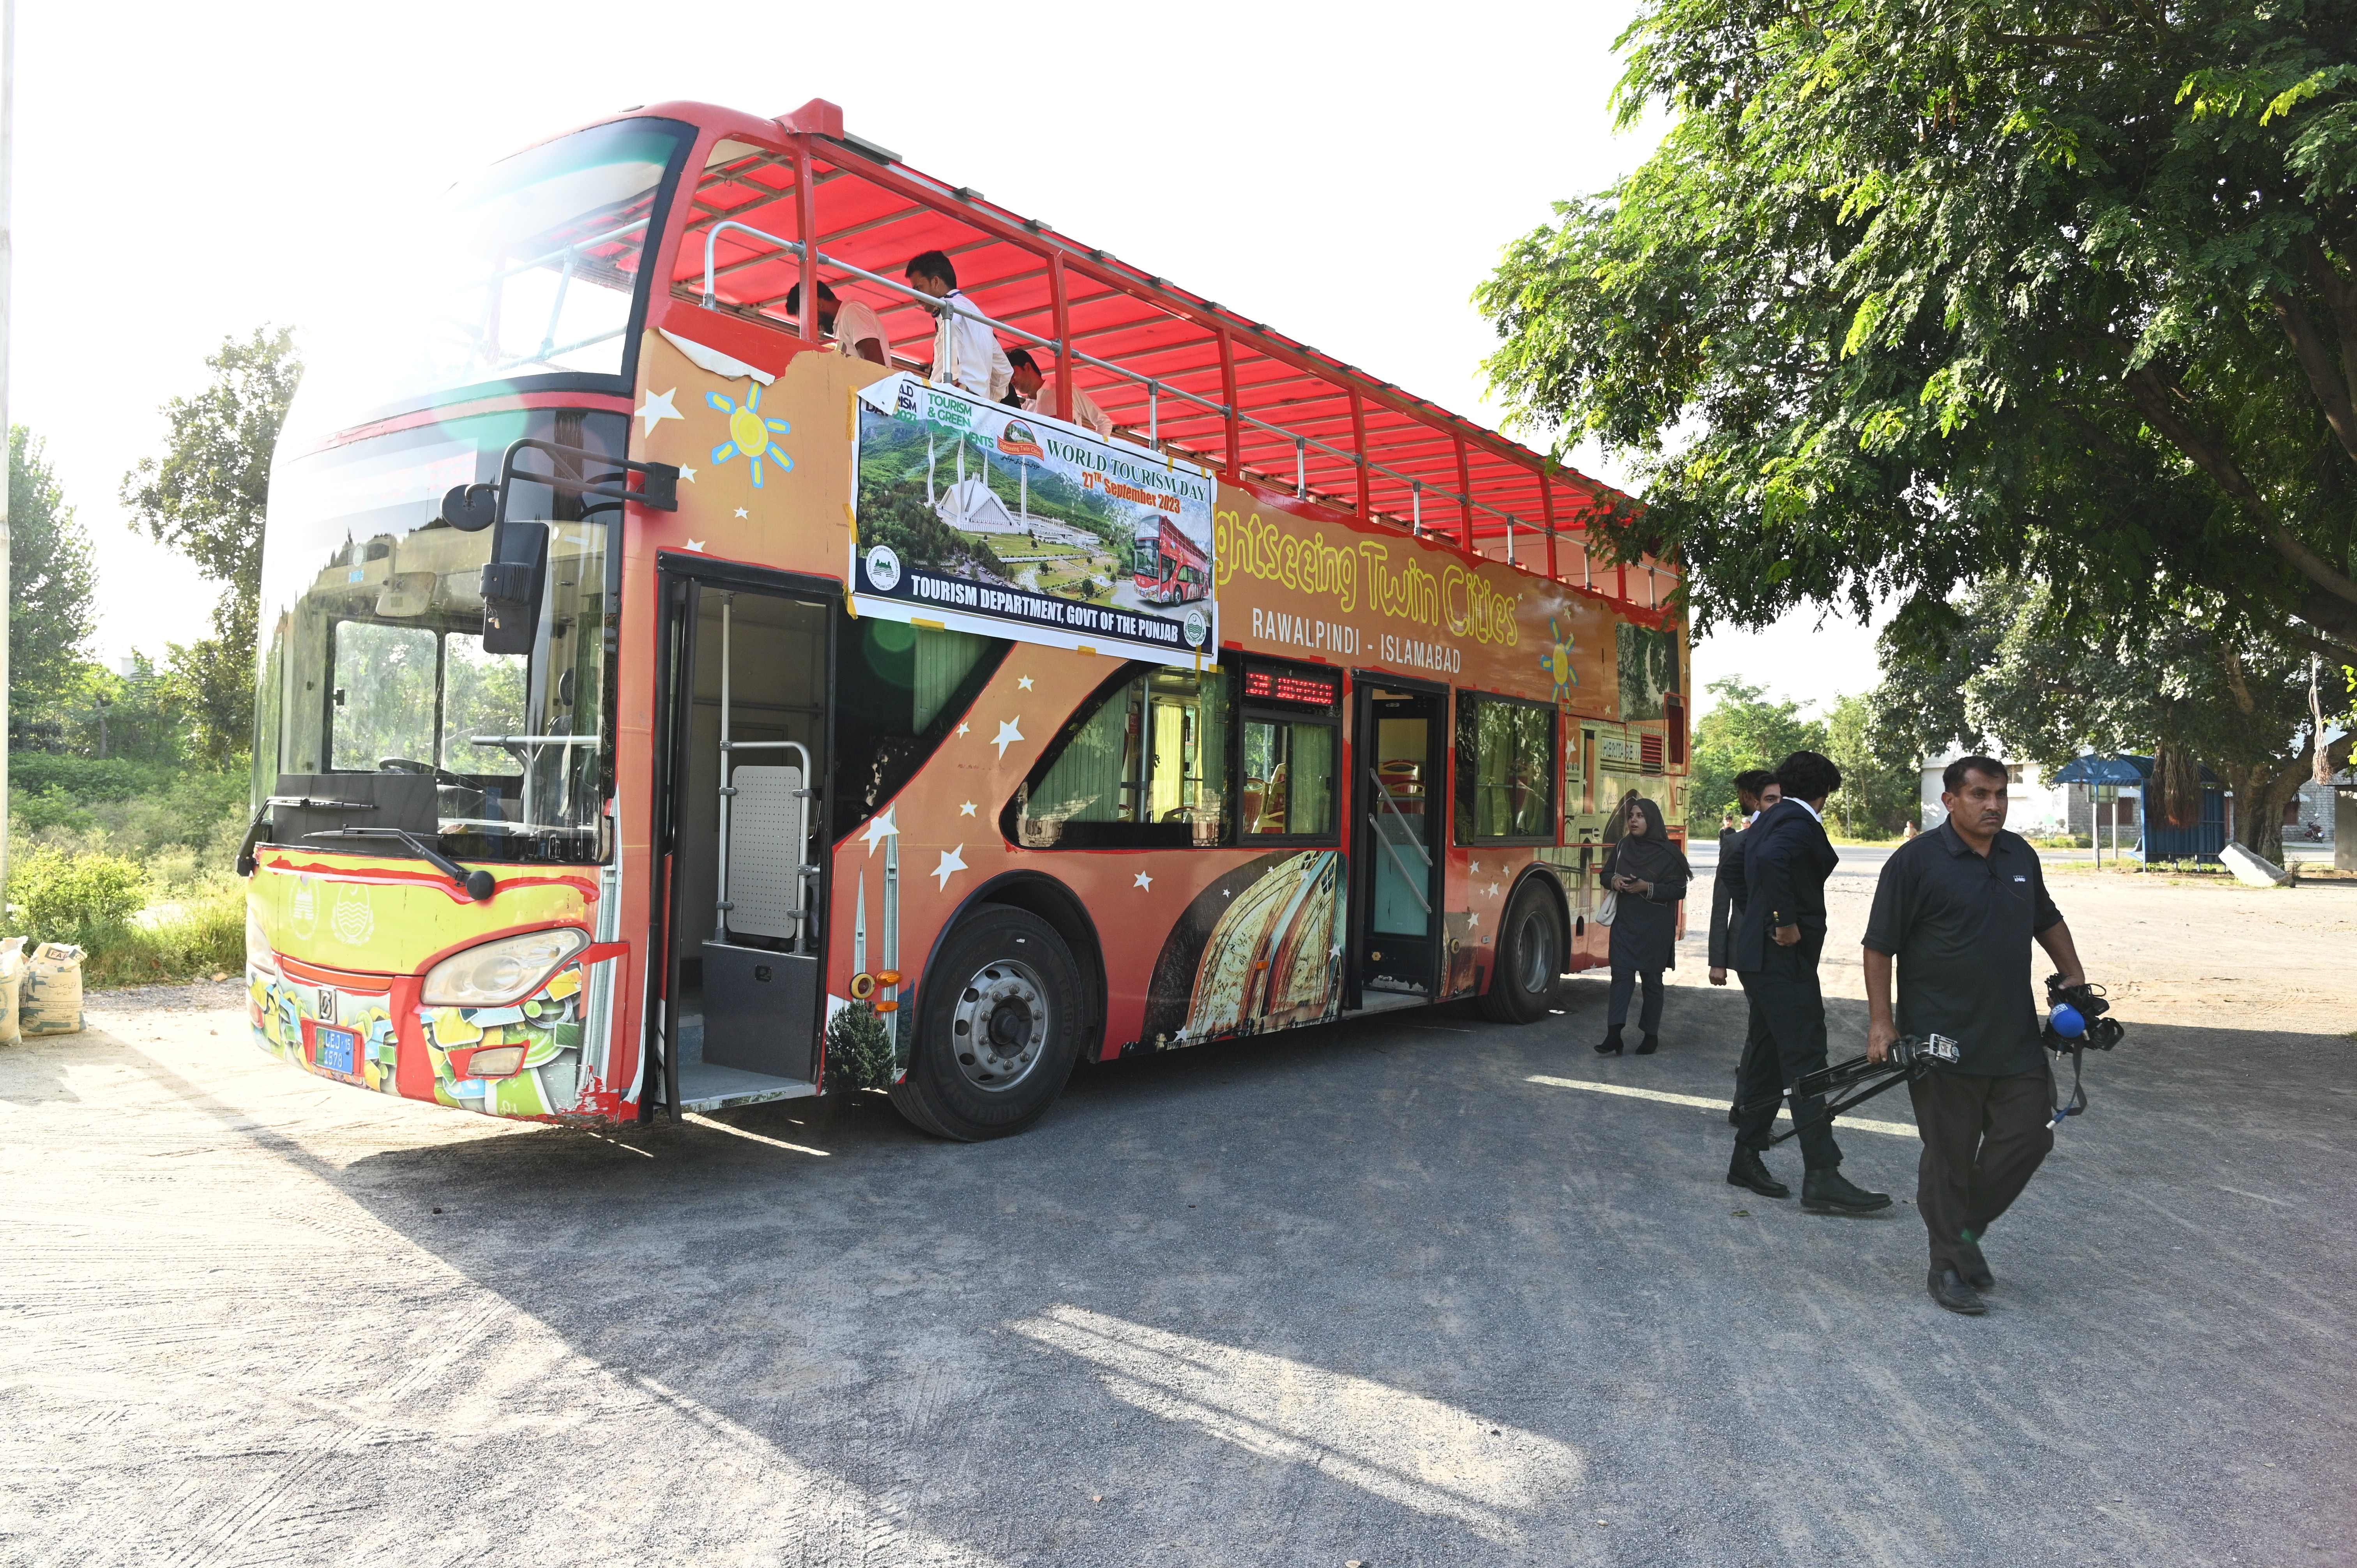 A view of double-decker tour bus